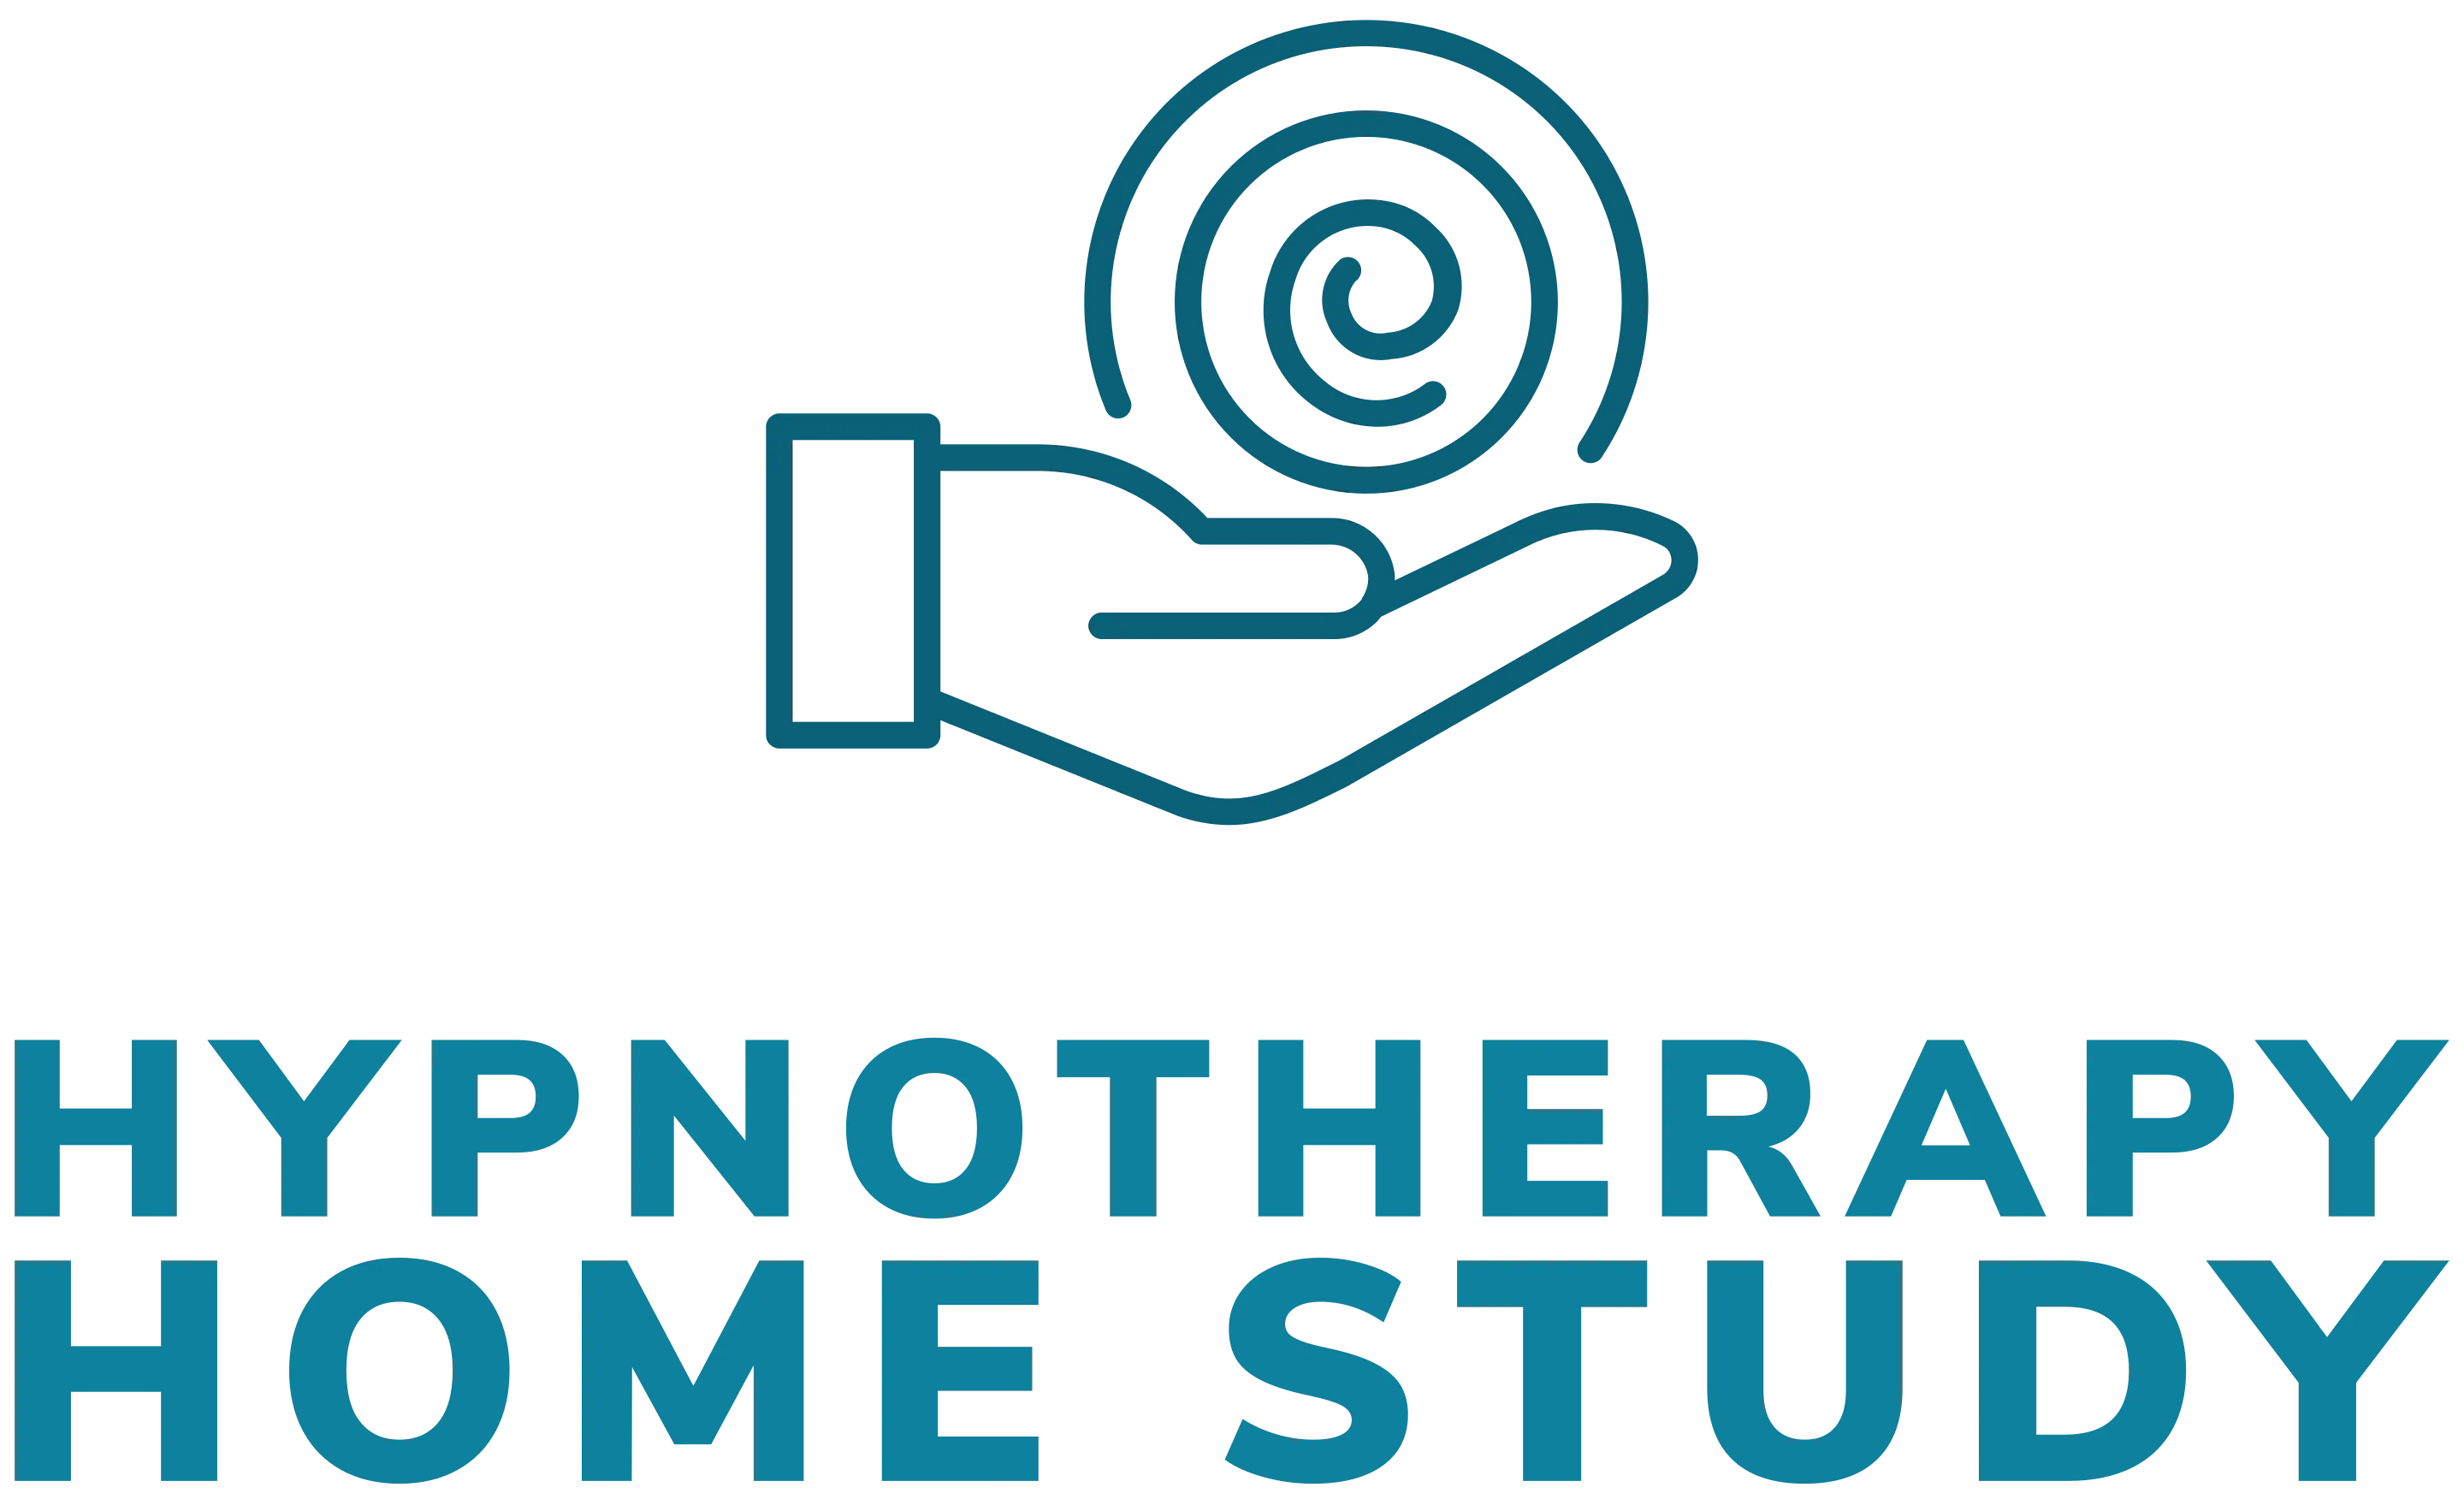 Hybrid Hypnotherapy Home Study